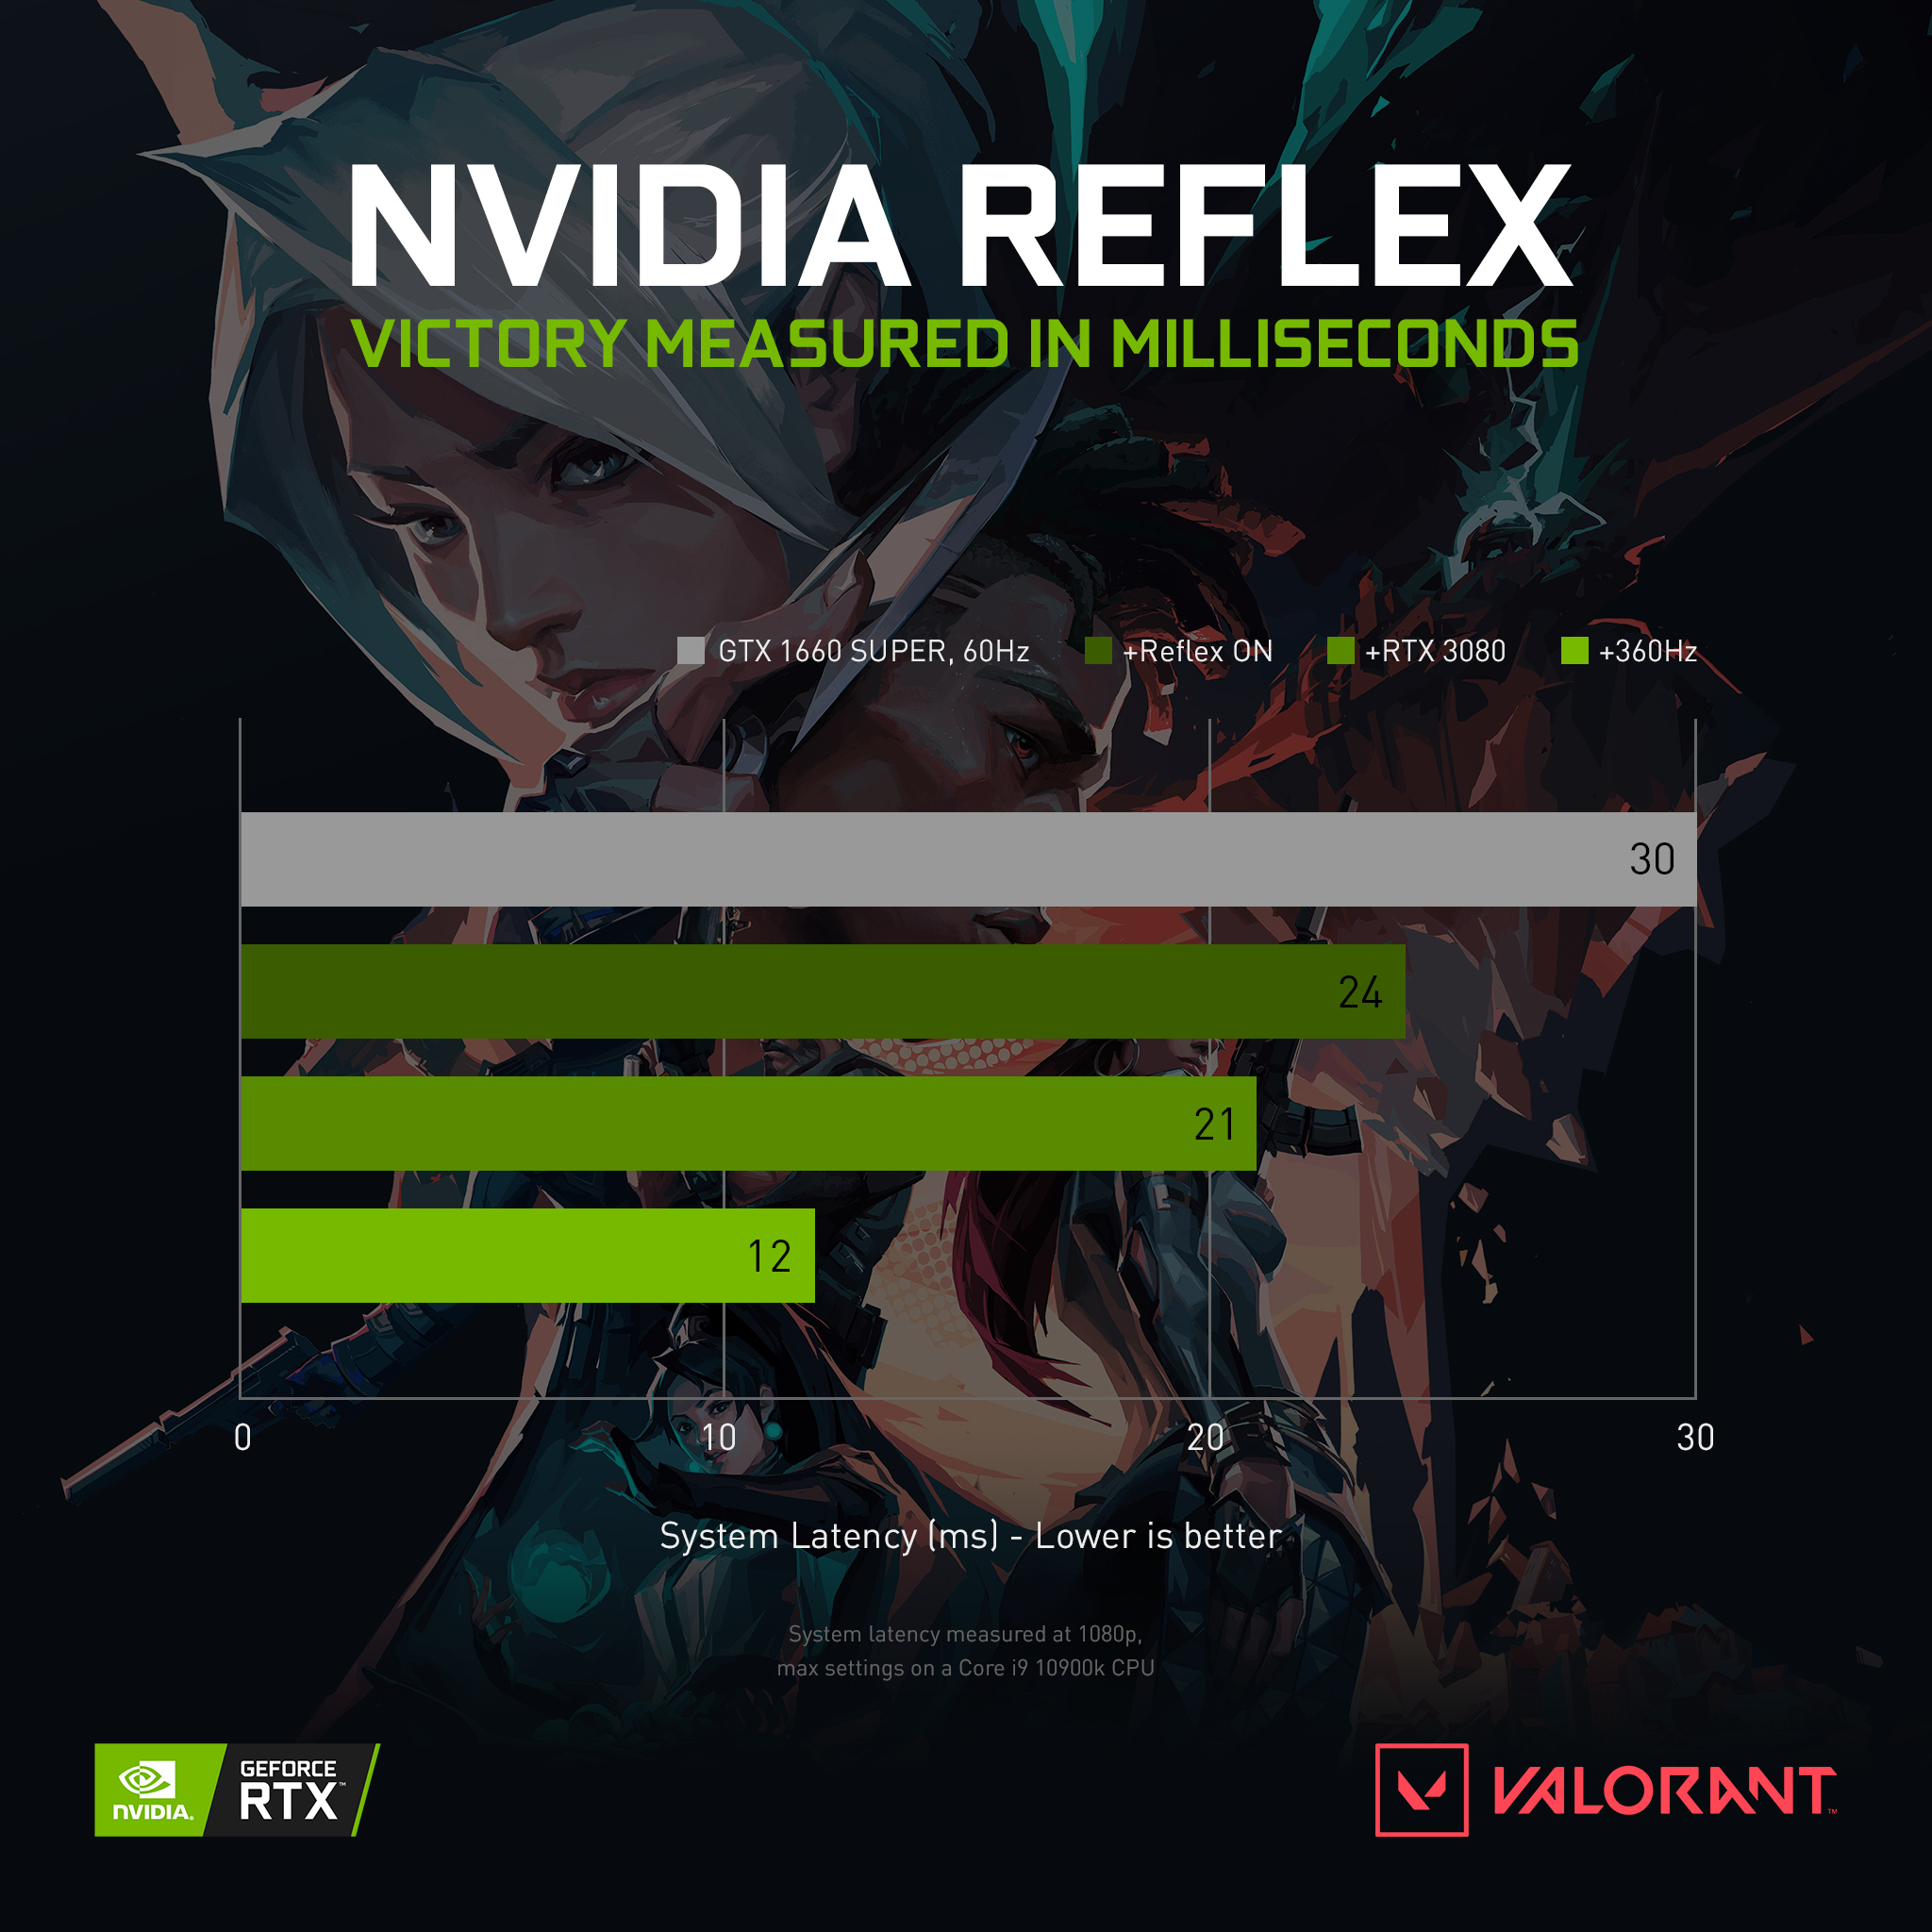 nvidia-reflex-social-perf-valorant-2048x2048